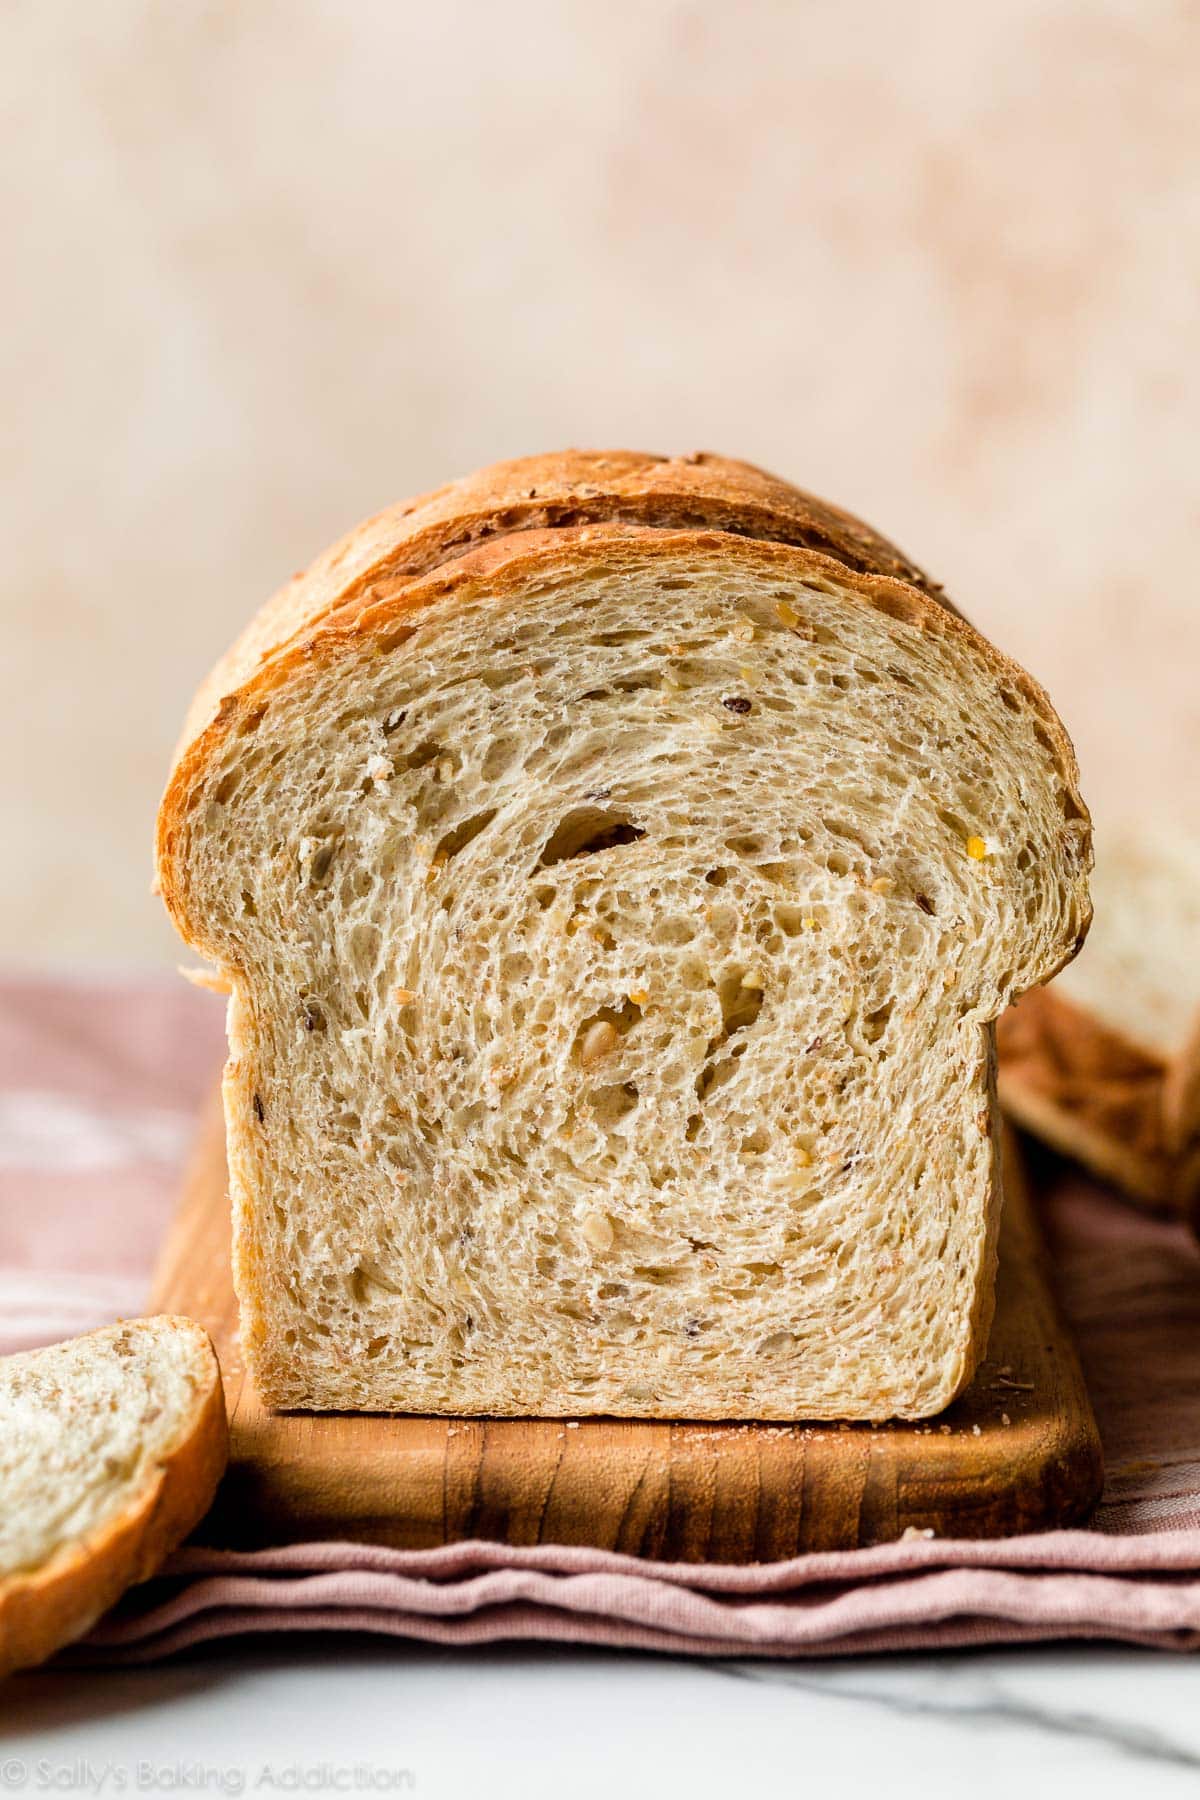 https://sallysbakingaddiction.com/wp-content/uploads/2021/01/multigrain-bread-loaf-2.jpg